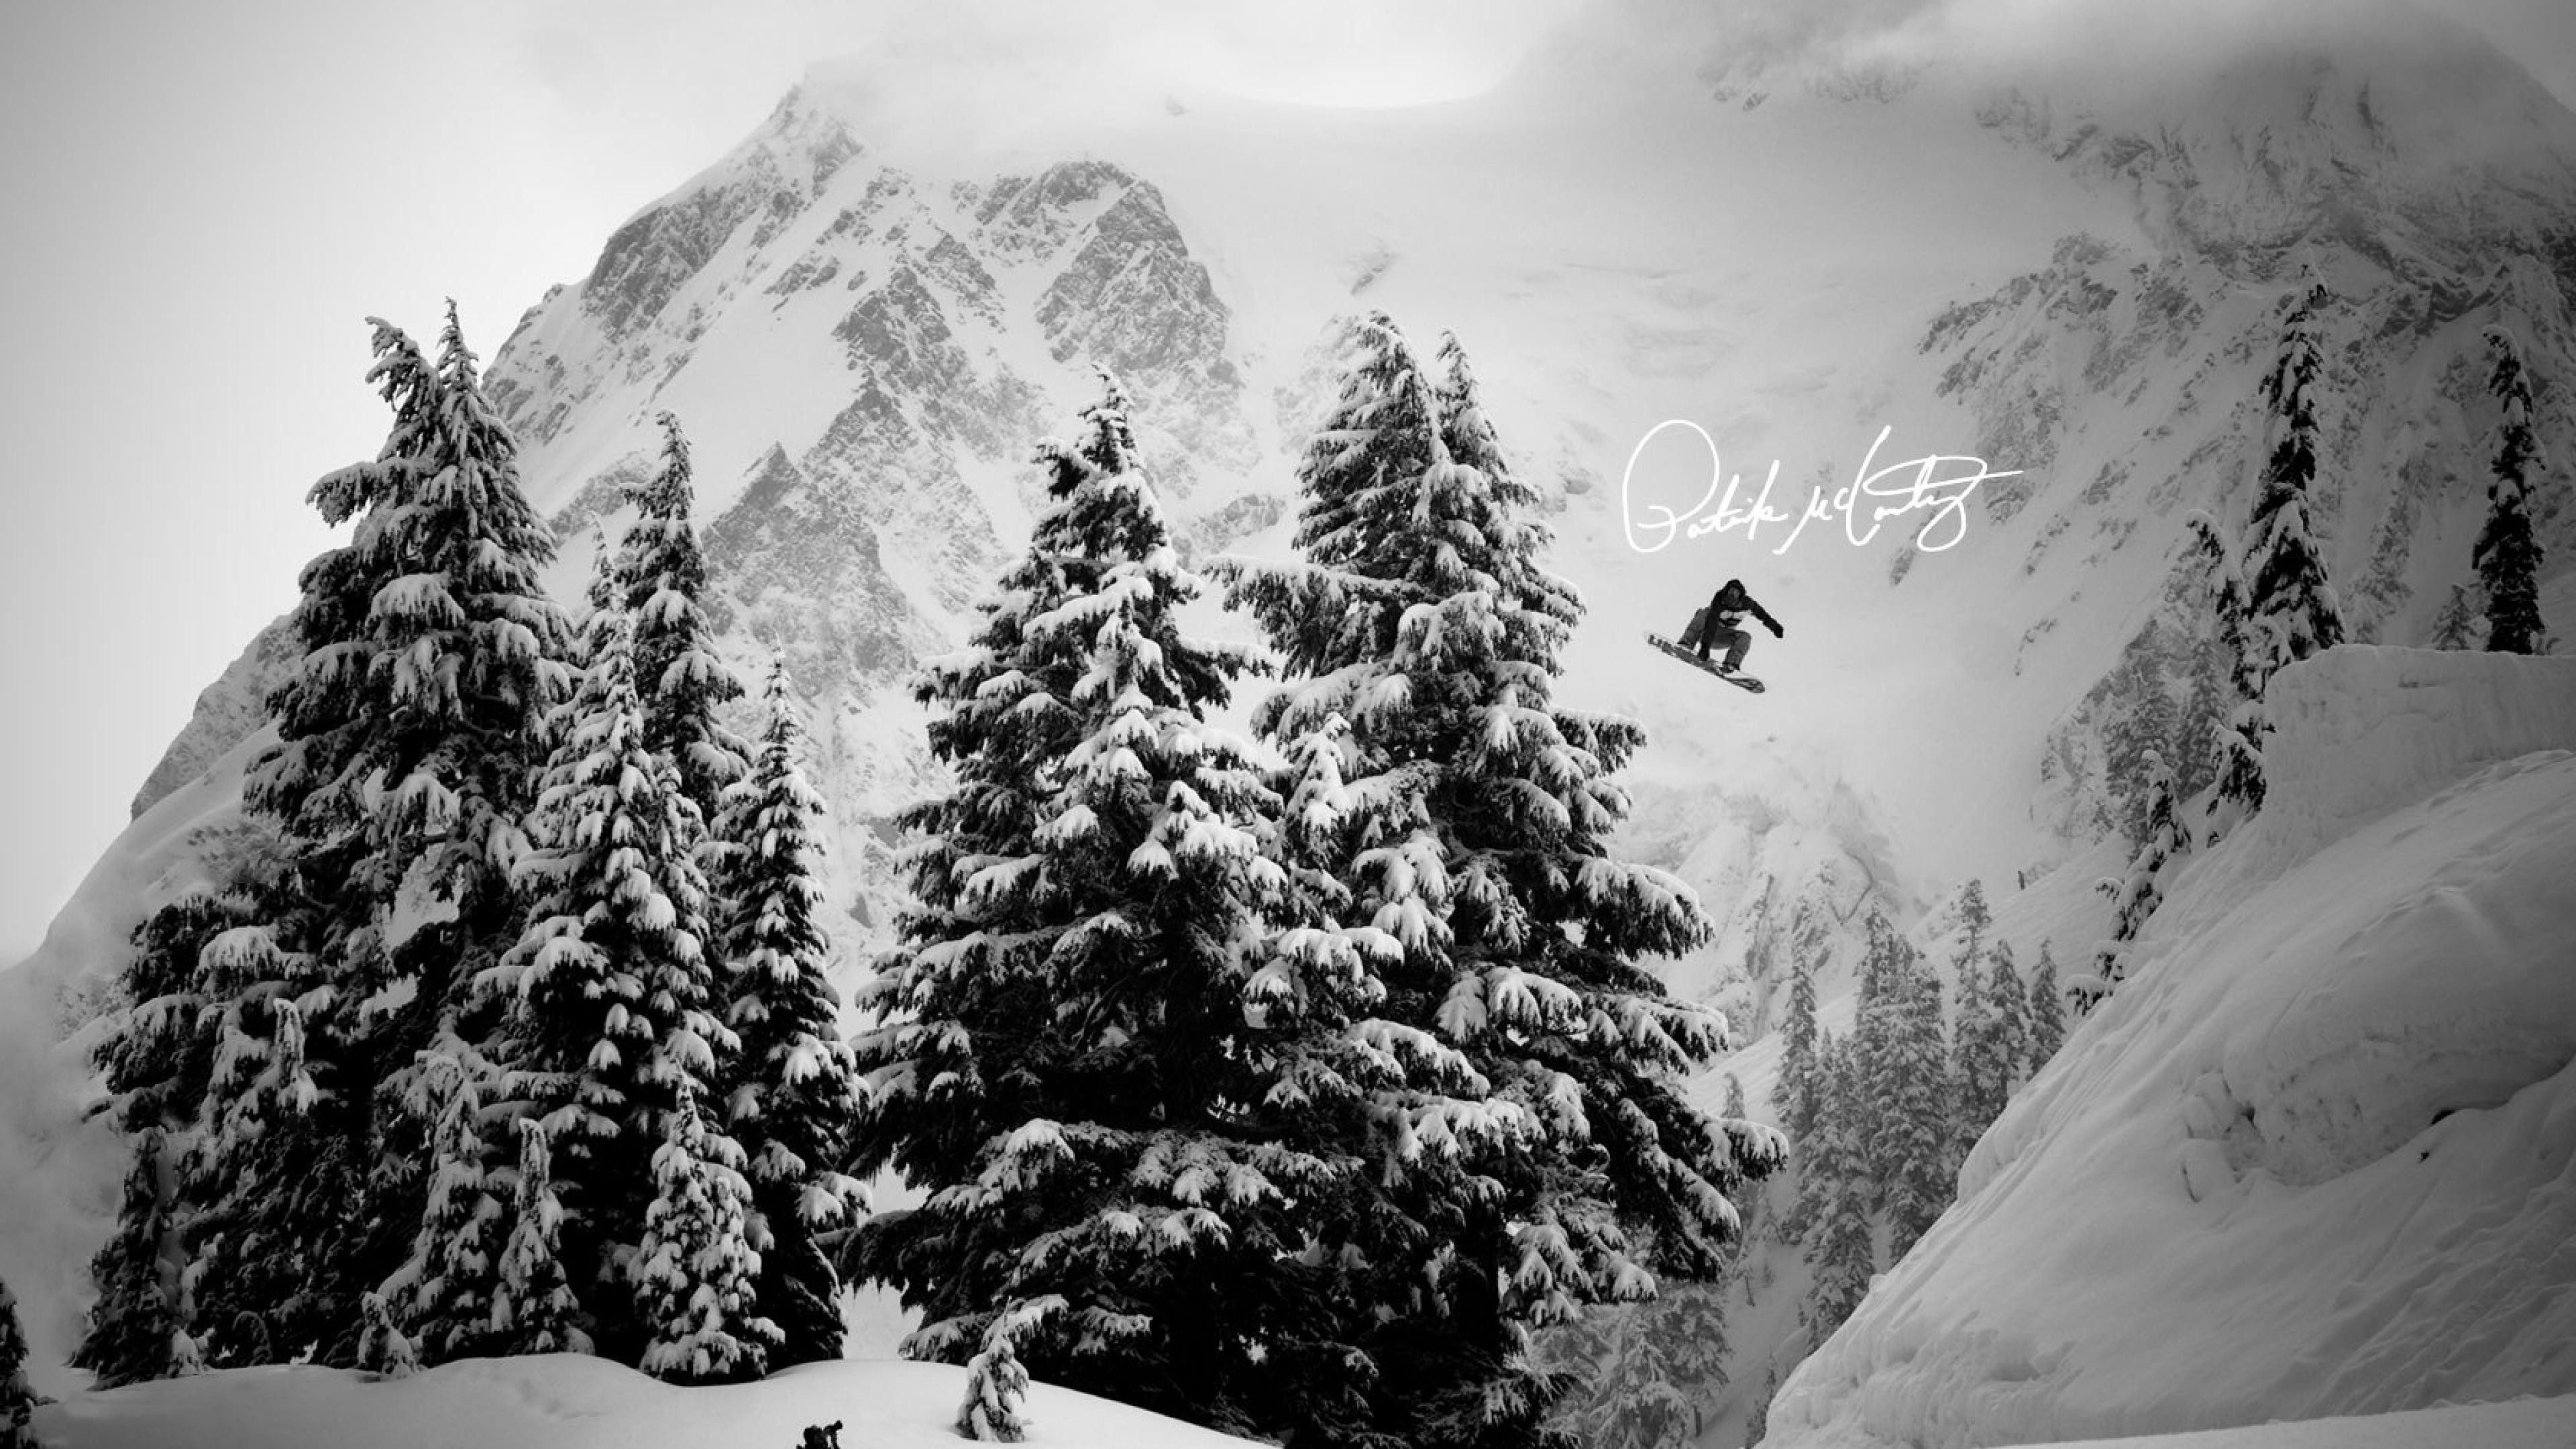 3840x2160 Free Download Snowboarding Wallpapers | PixelsTalk.Net